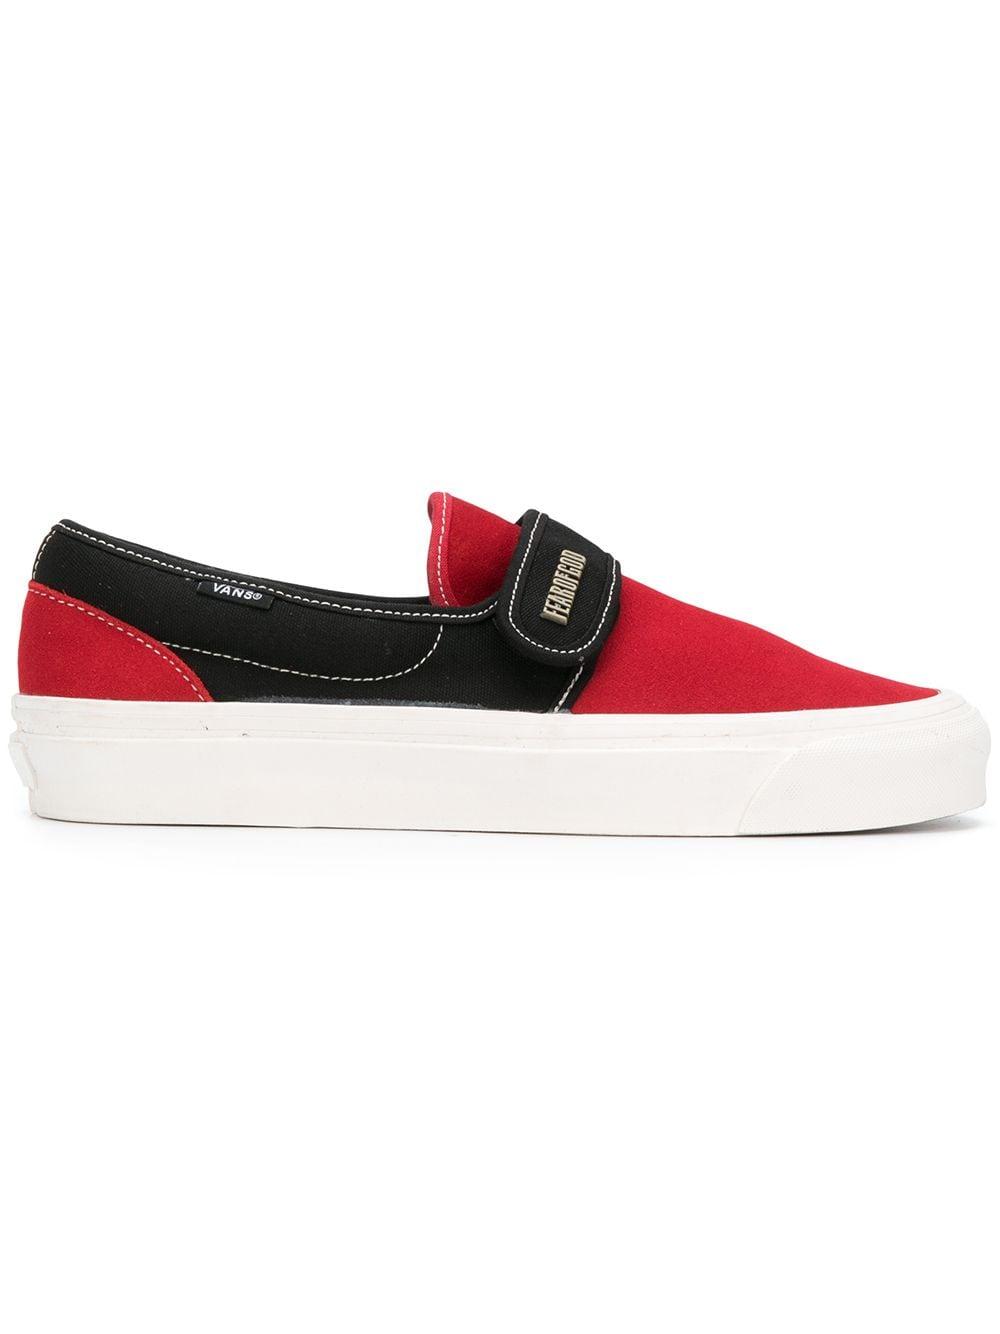 Vans Slip-on 47 'fear Of God' Shoes in Red/Black (Red) for Men - Save 8% |  Lyst